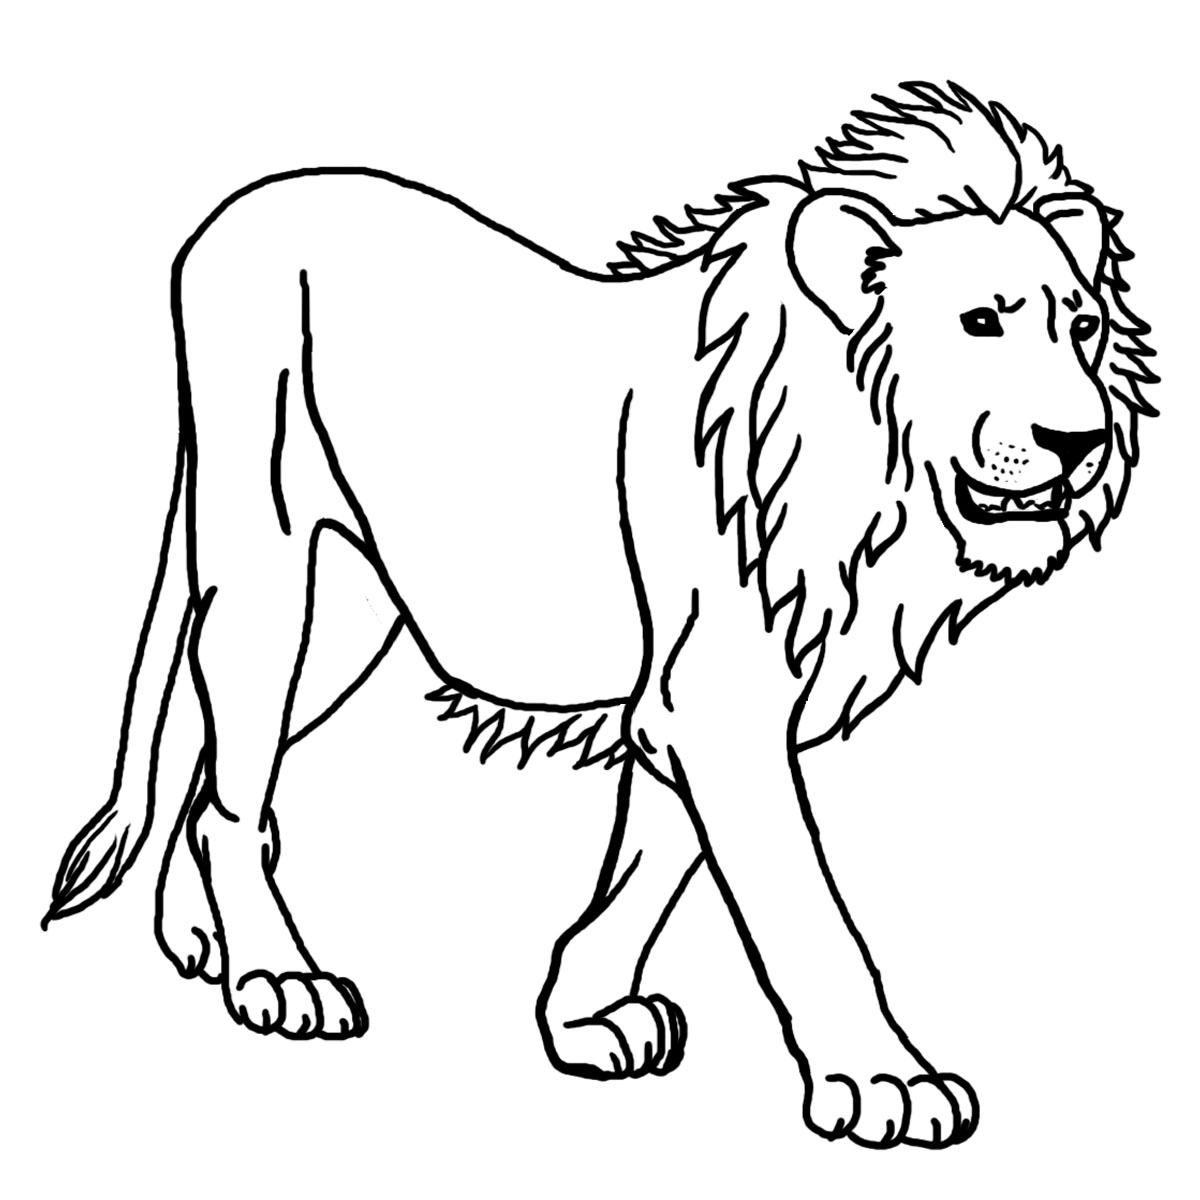 Clip Art  Cartoon Animal Faces  Lion B W   Abcteach